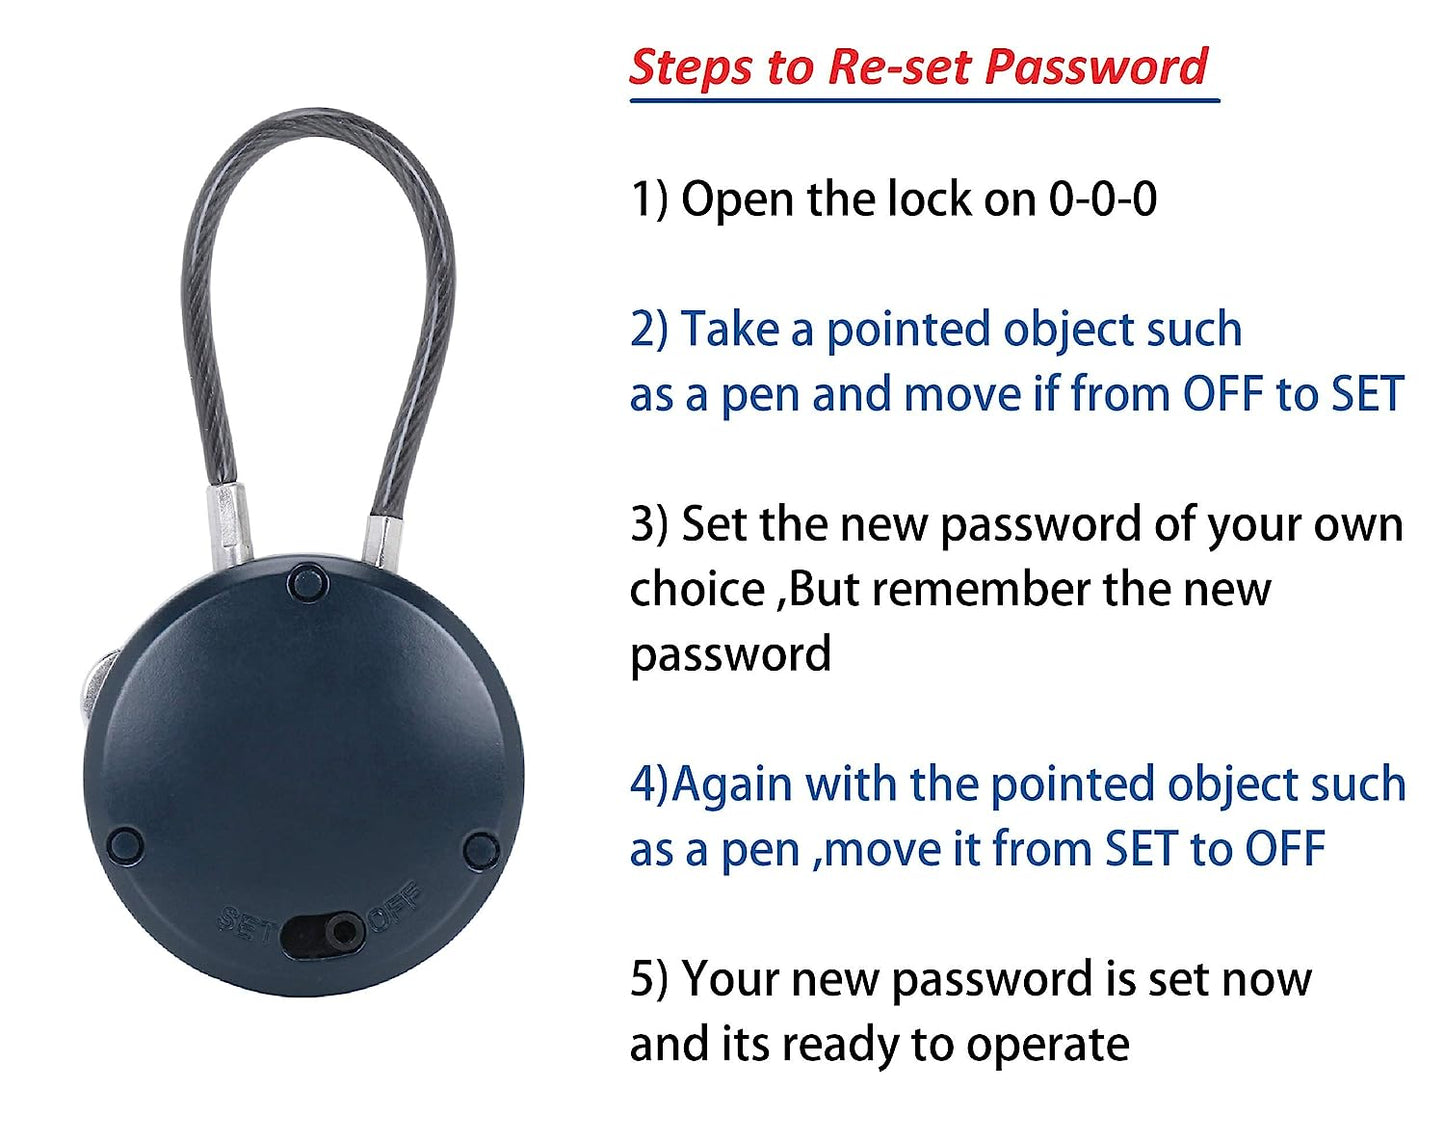 DOCOSS 107-3 Digit TSA Approved Metal Lock for Luggage Bag USA International Number Locks Travelling Password Combination Travel Locks Padlock, (Black)